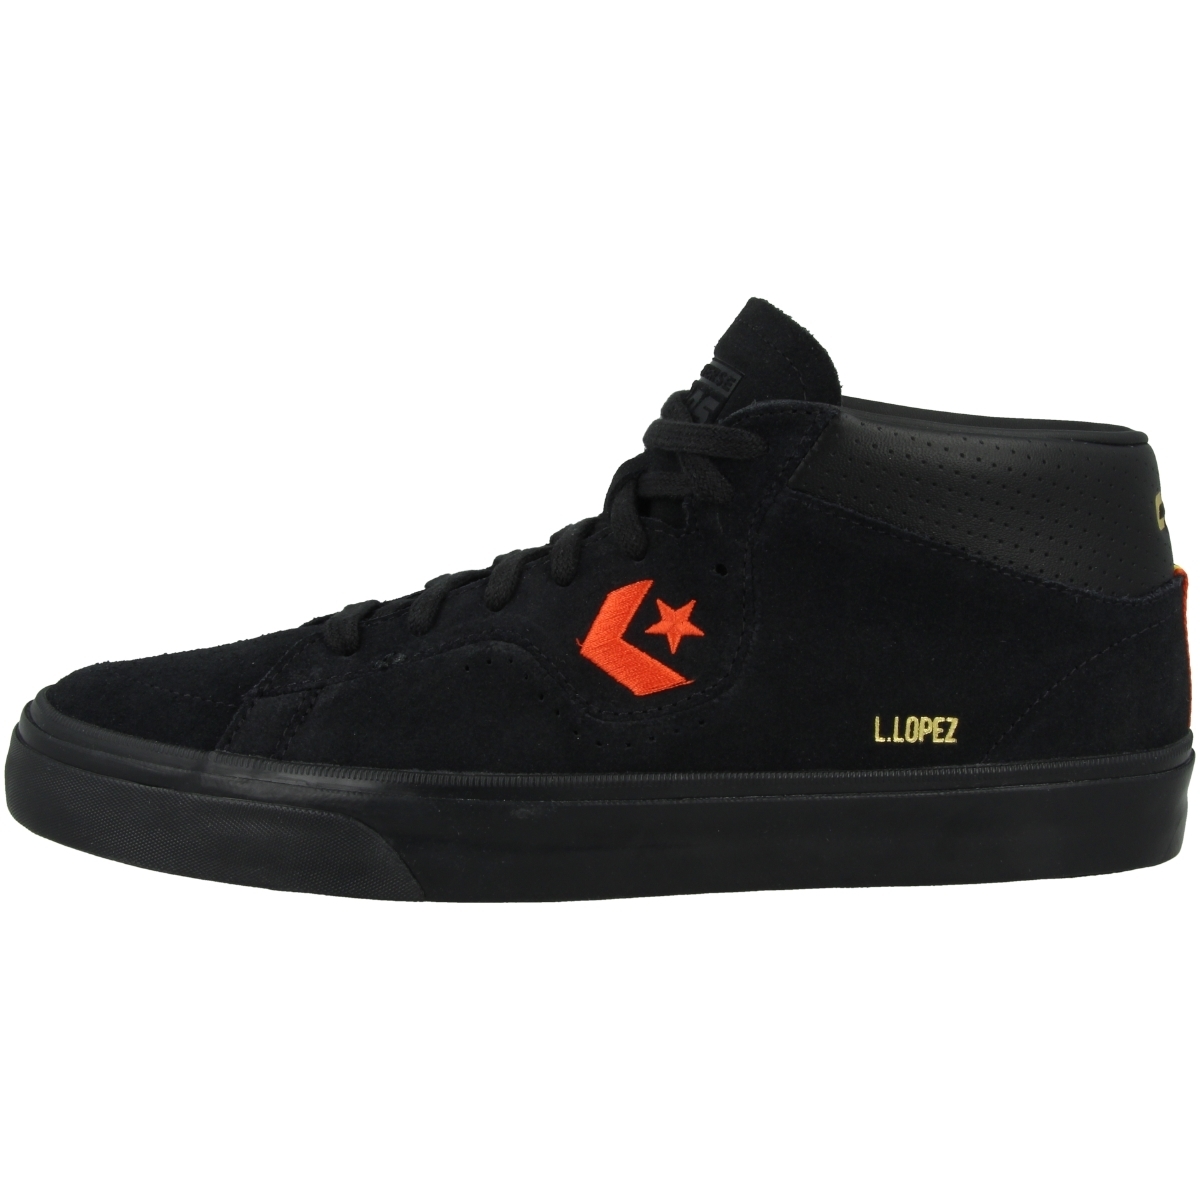 Converse Cons Louie Lopez Pro Sneaker mid schwarz